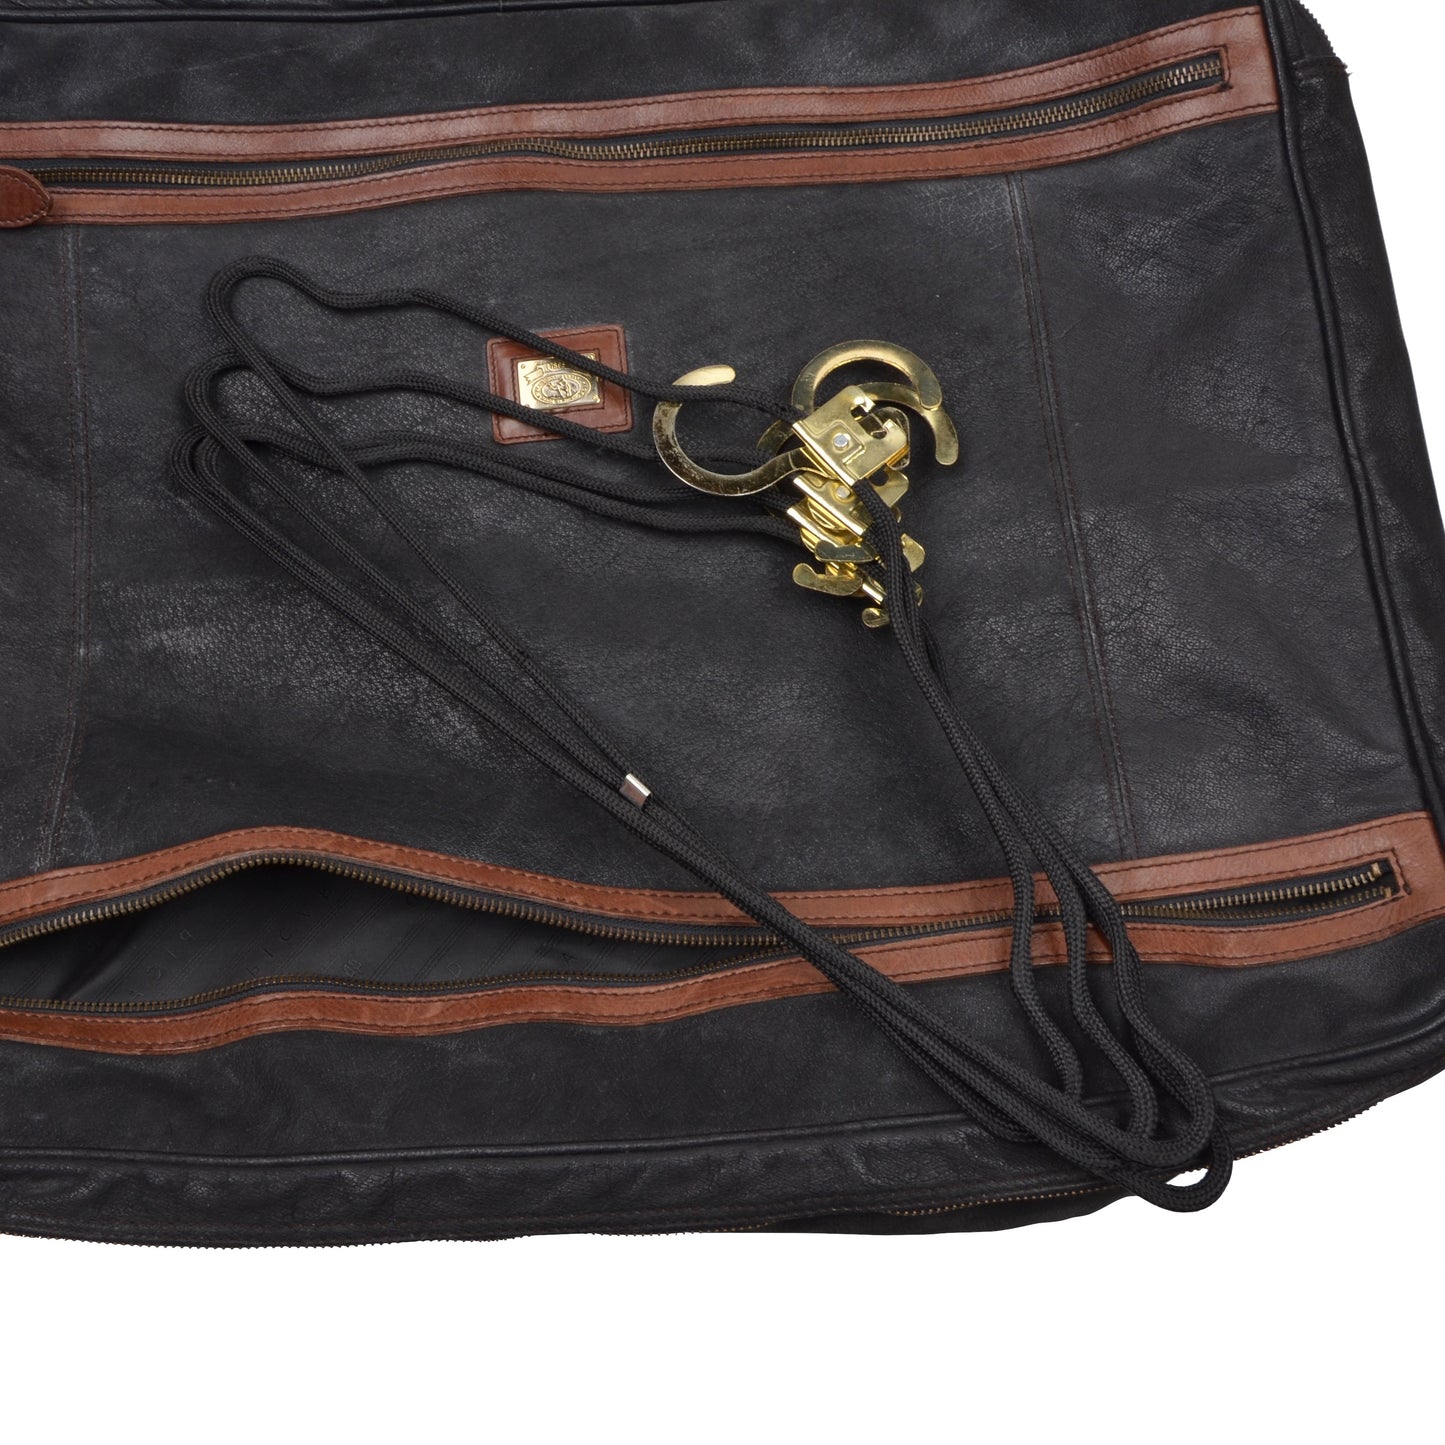 The Original Ascari Bag by Picard Kleidersack aus Leder - Schwarz